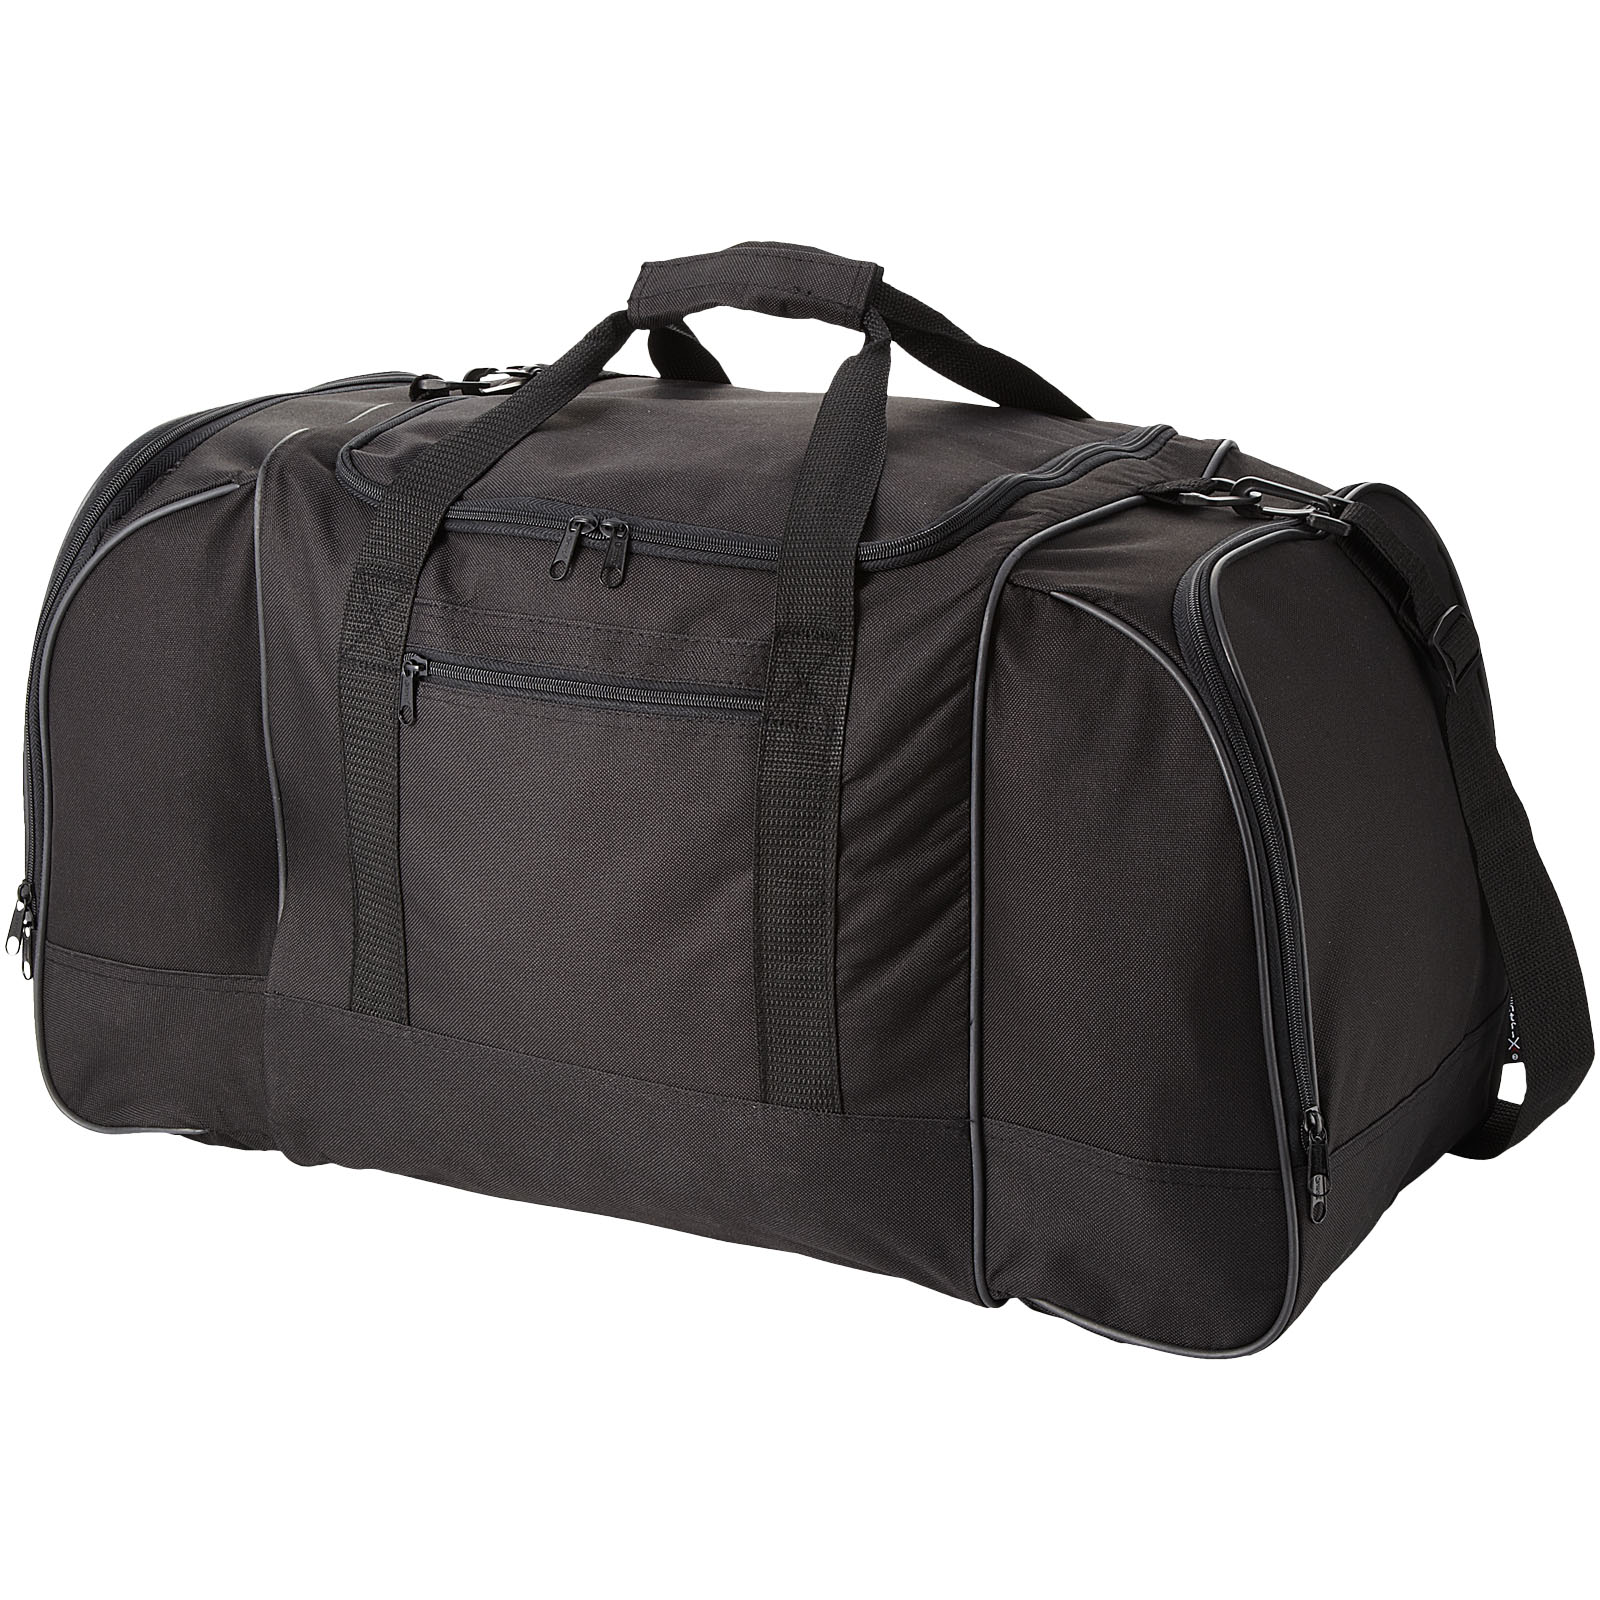 Advertising Travel bags - Nevada travel duffel bag 30L